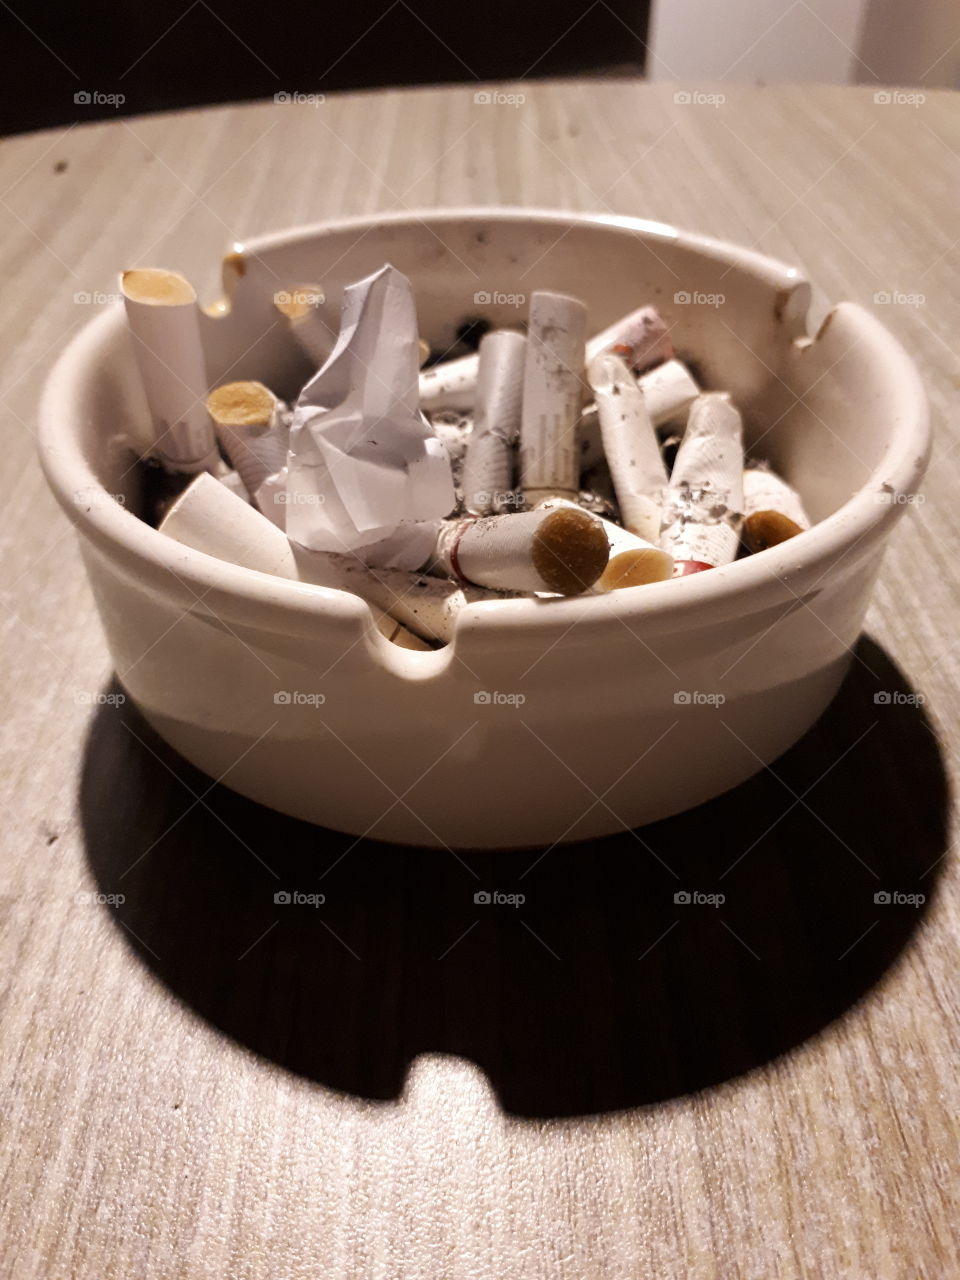 ashtrays full of cigarettes